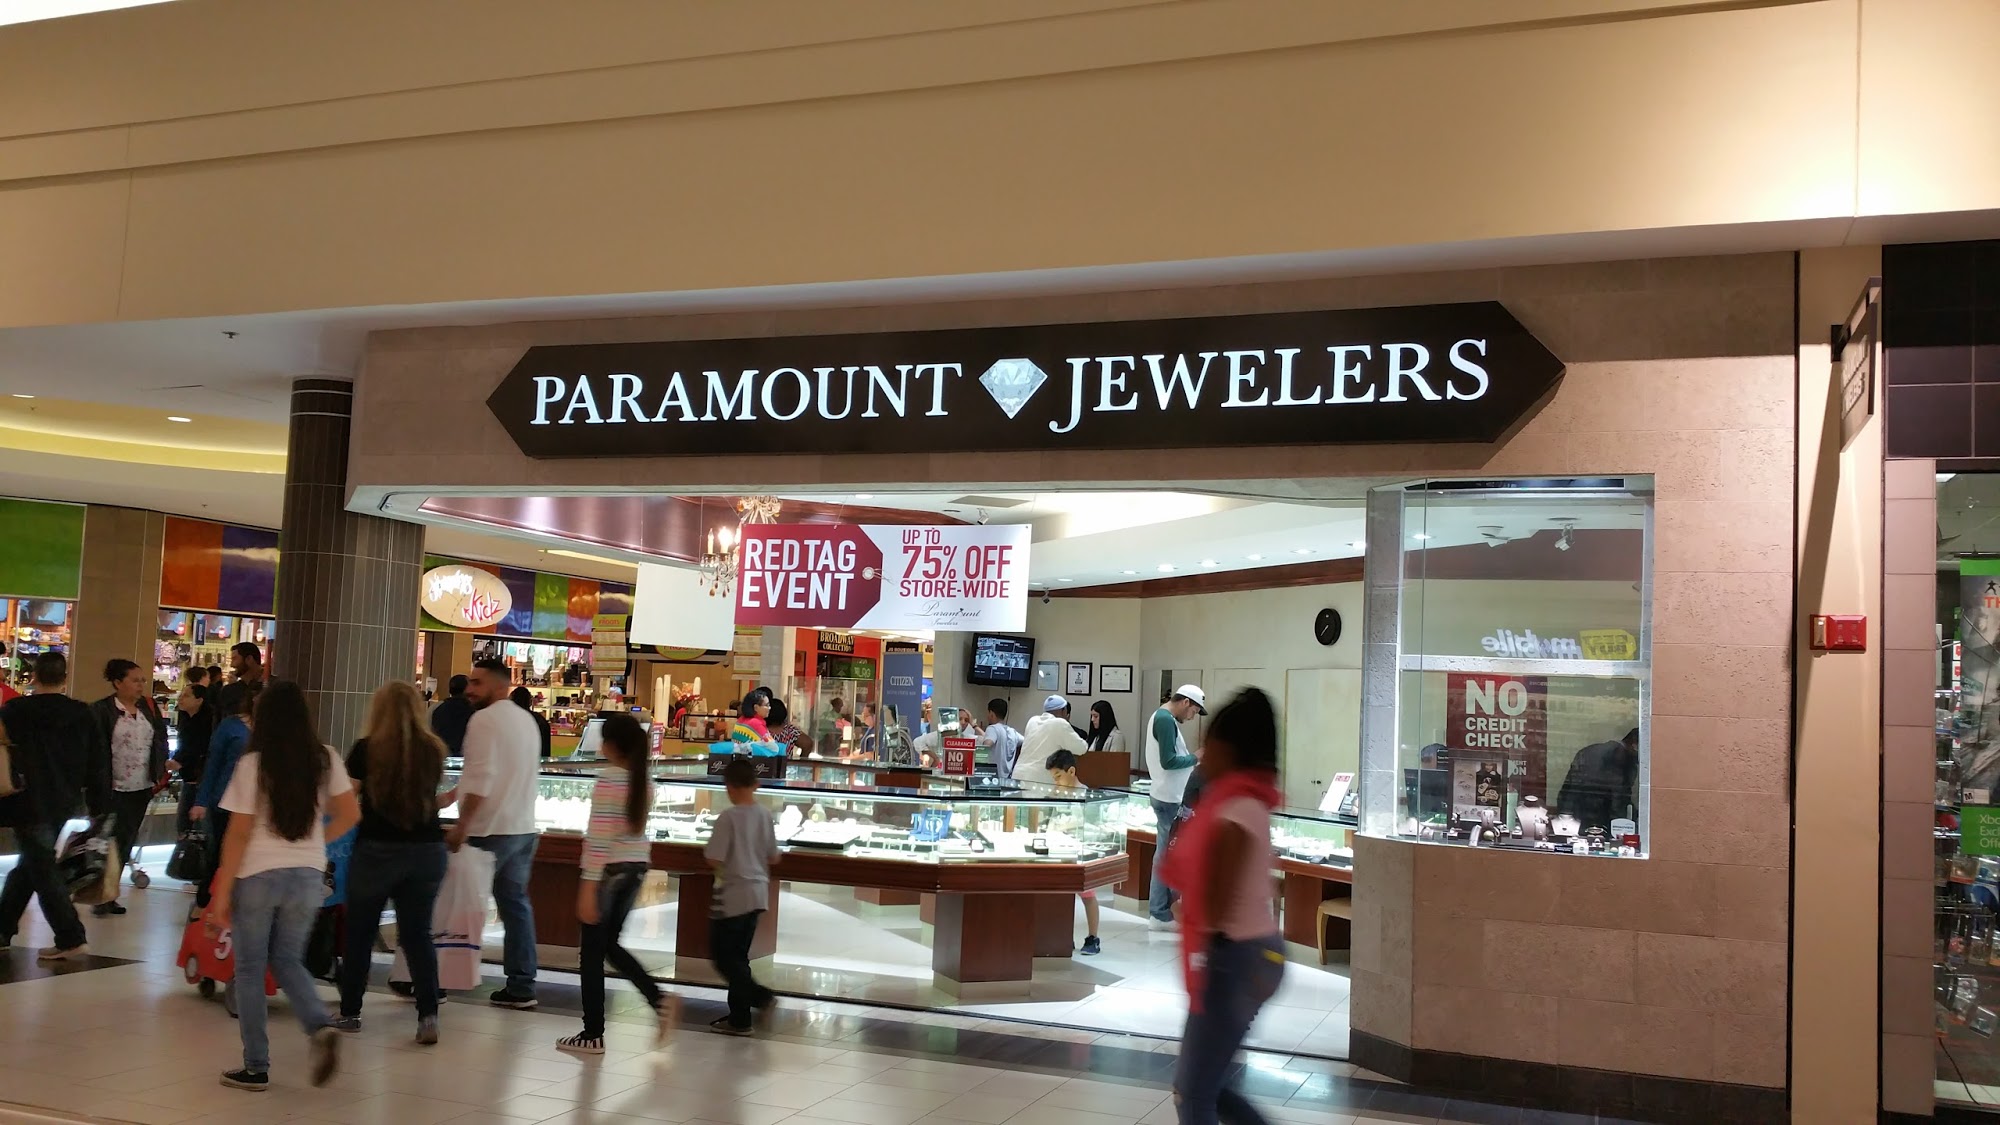 Paramount Jewelers